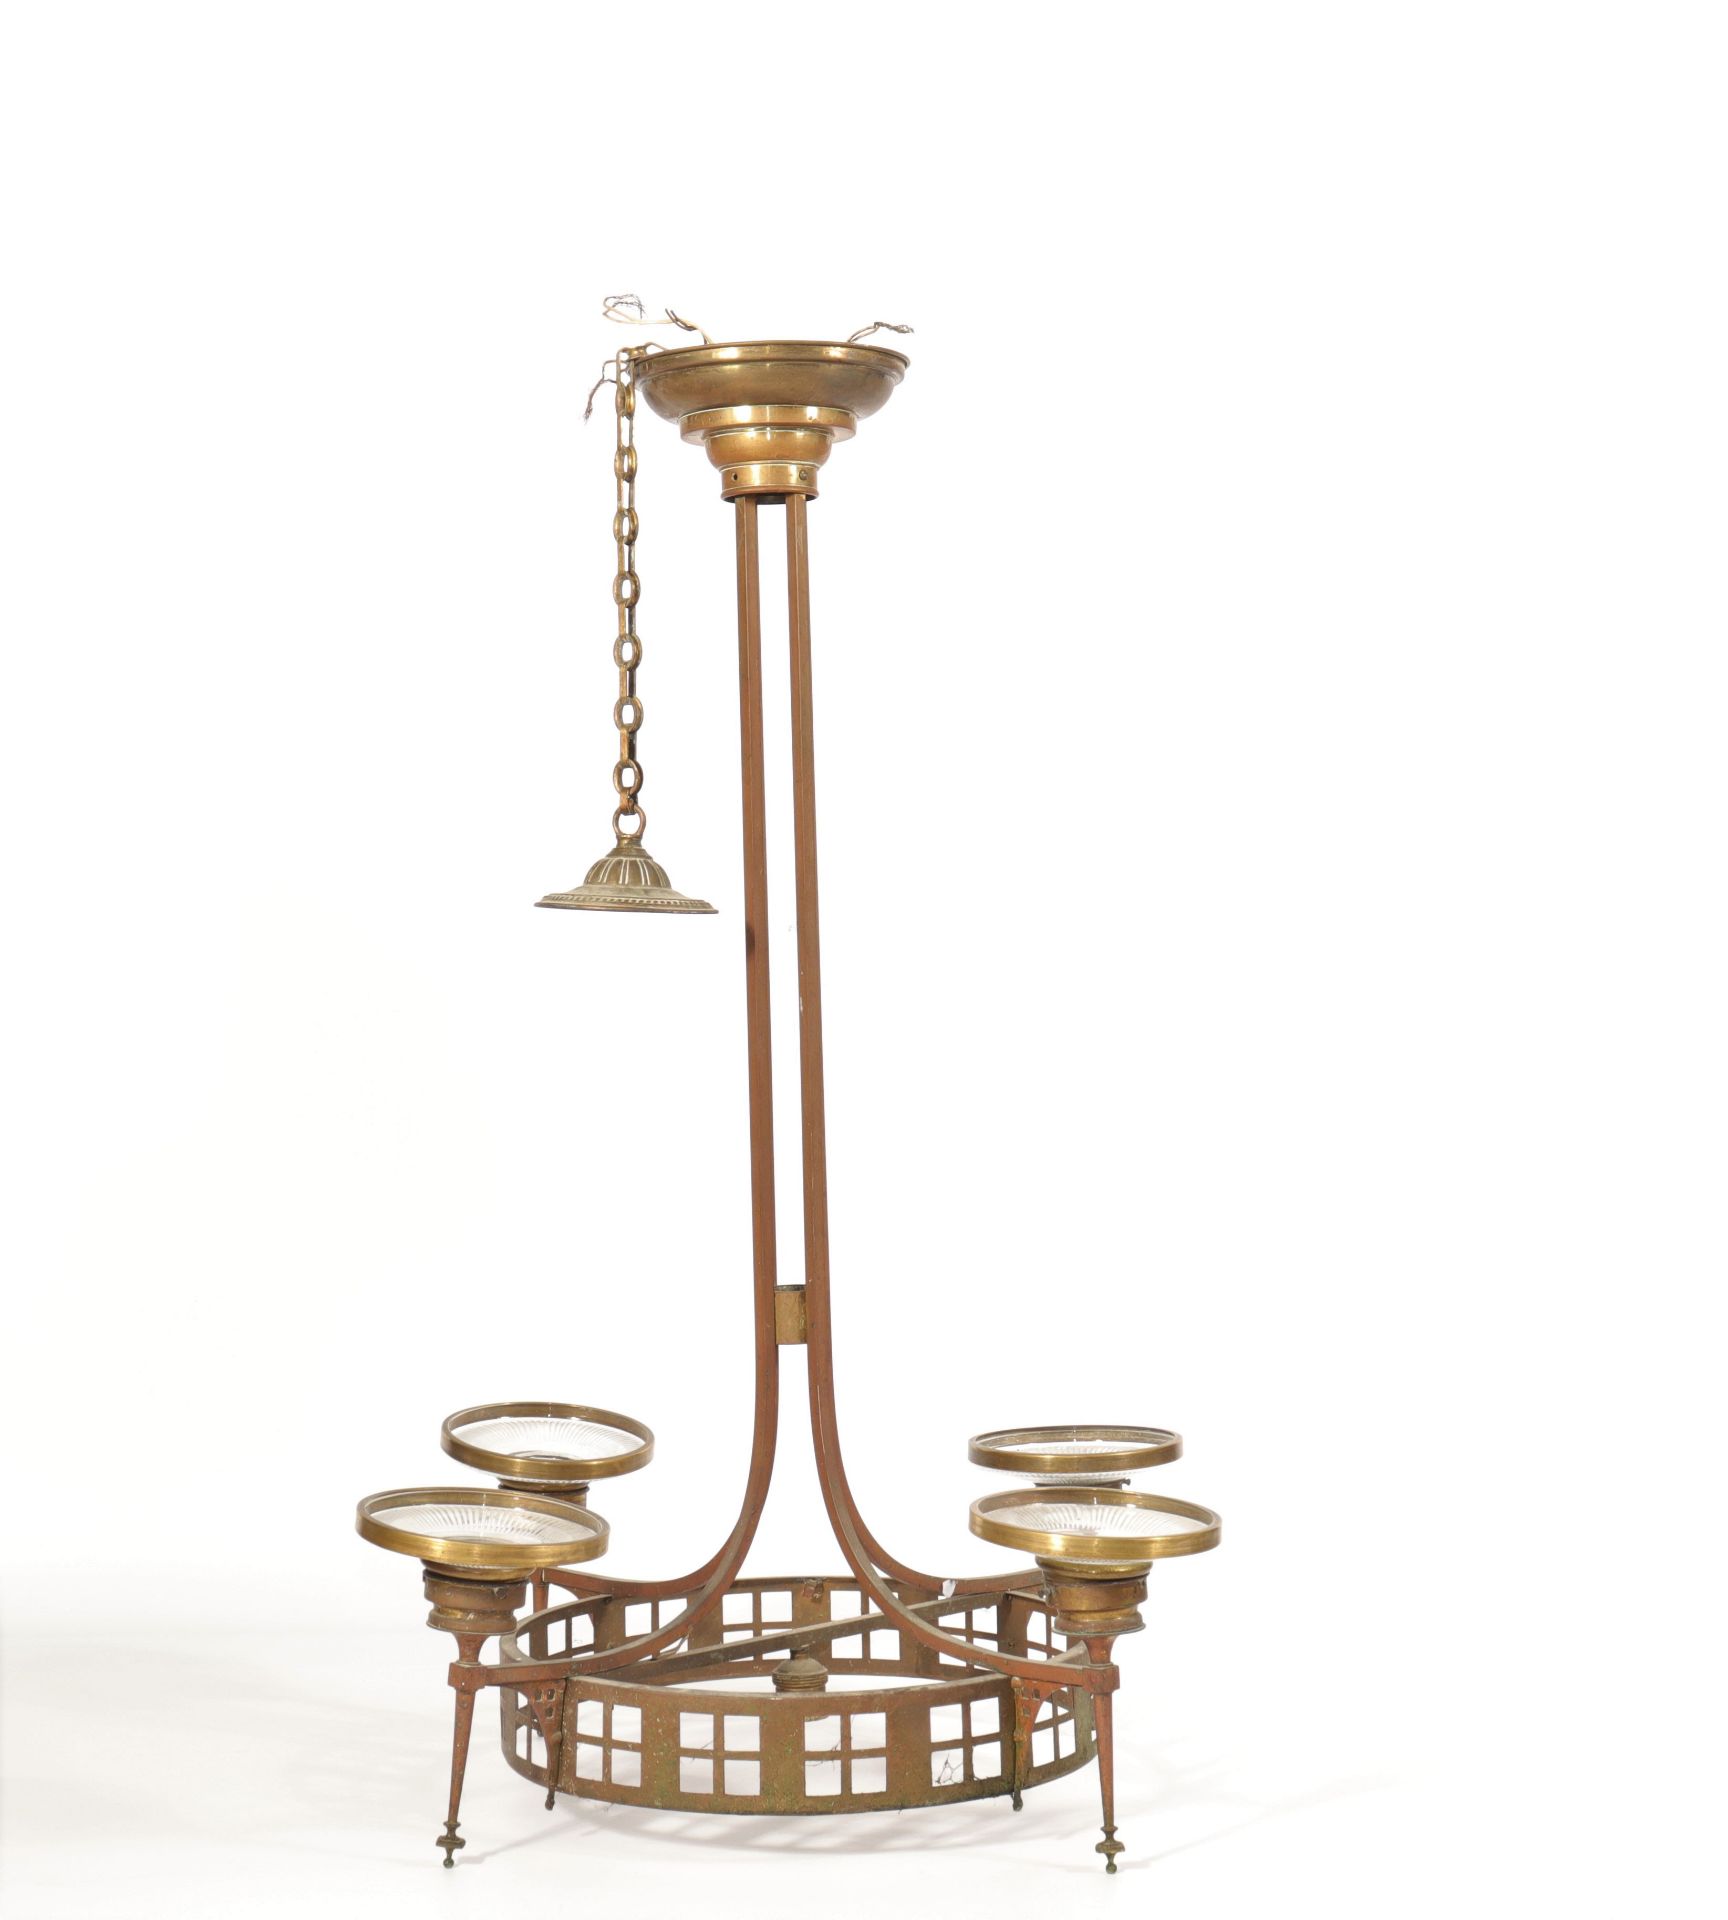 Paul HAMESSE (1877 - 1956), att Brass chandelier 1904